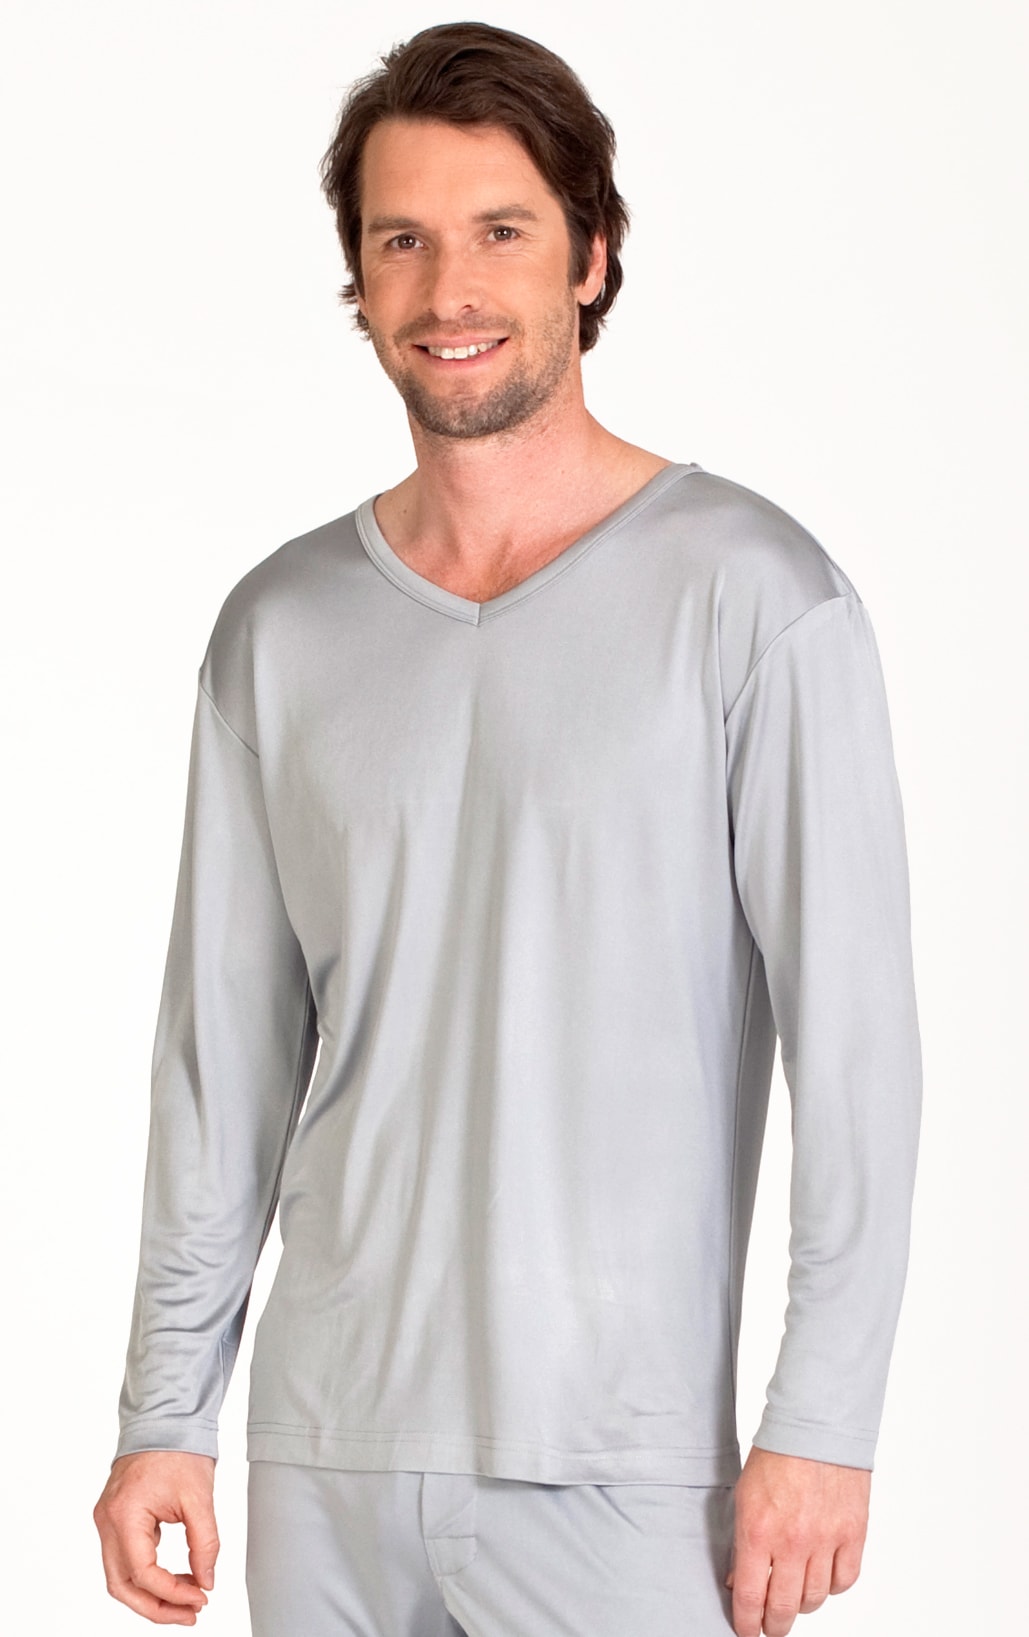 Silk shirt v-neck long sleeve grey